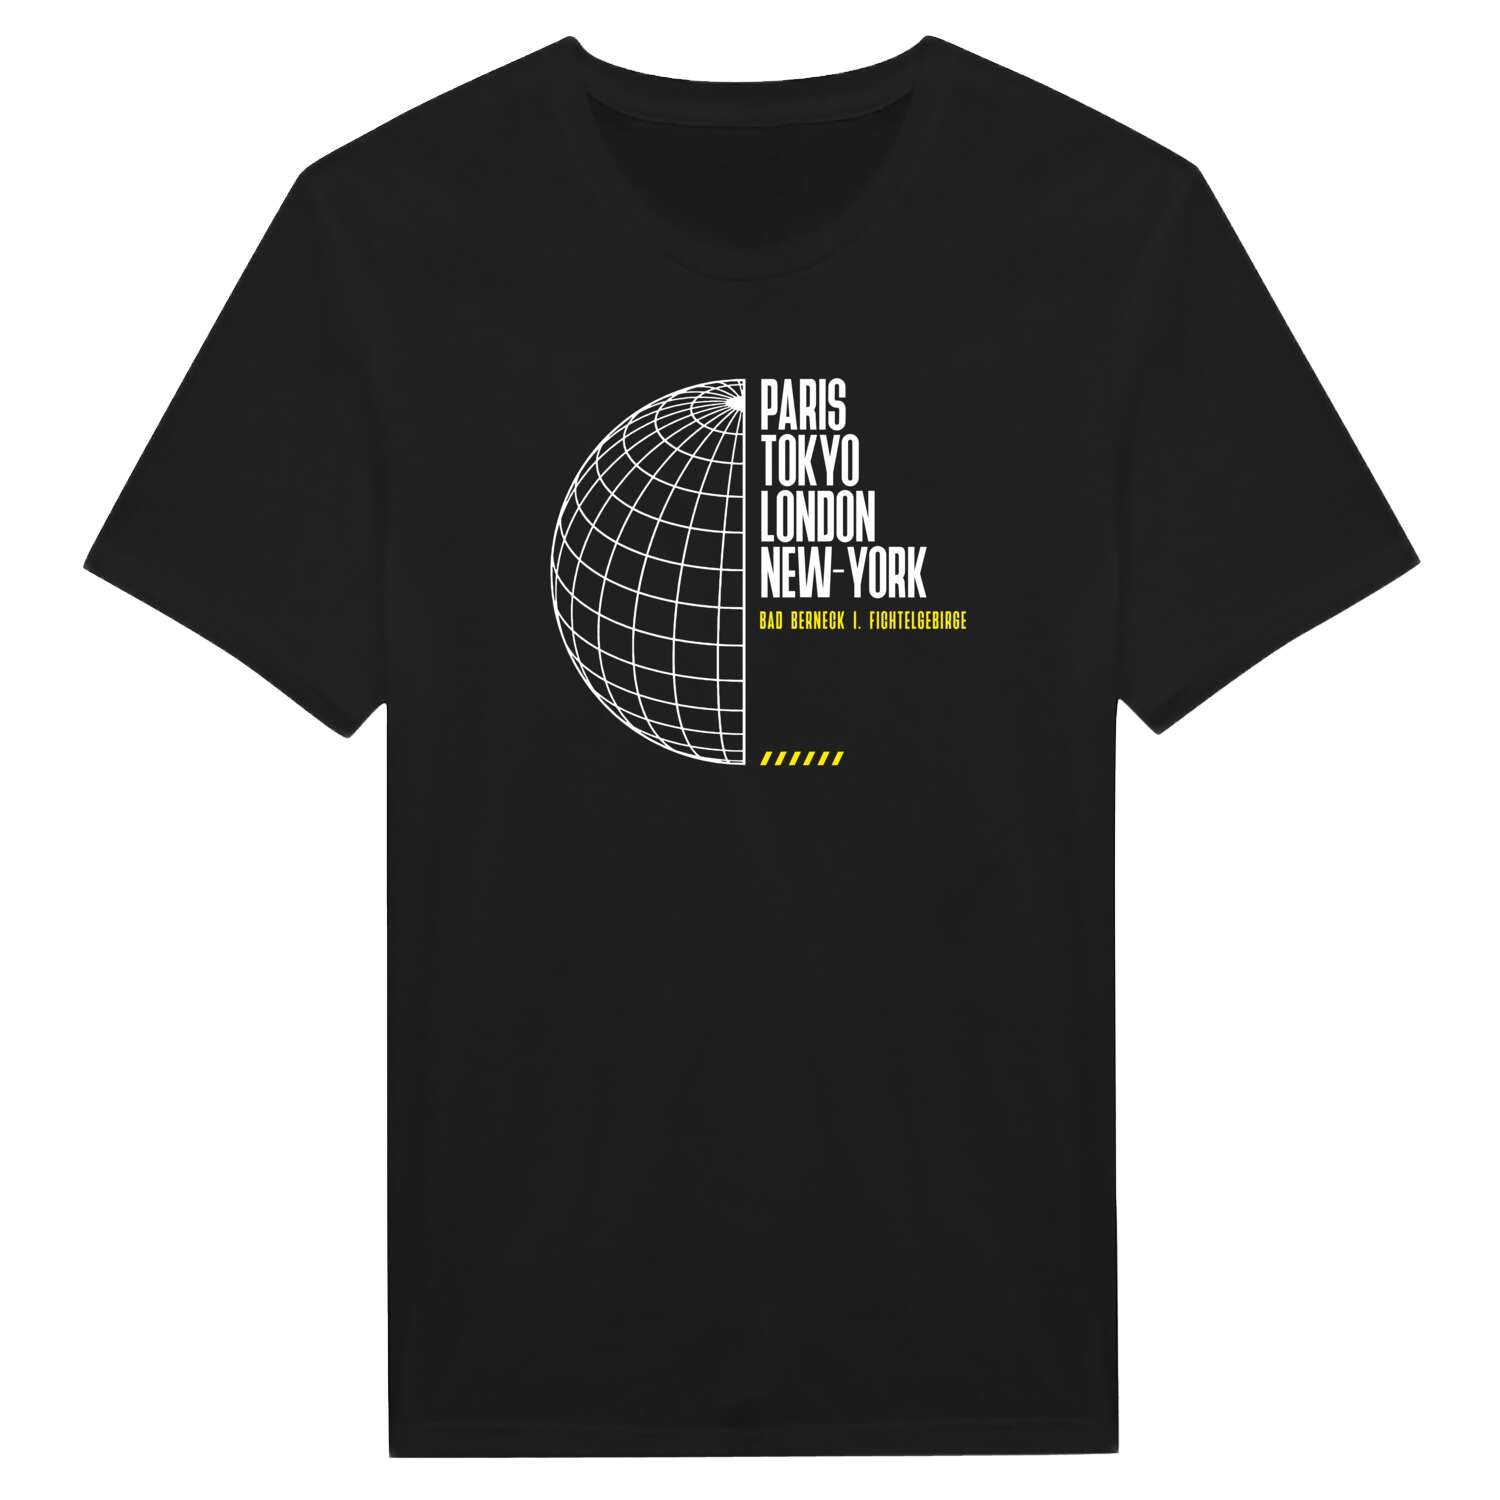 Bad Berneck i. Fichtelgebirge T-Shirt »Paris Tokyo London«